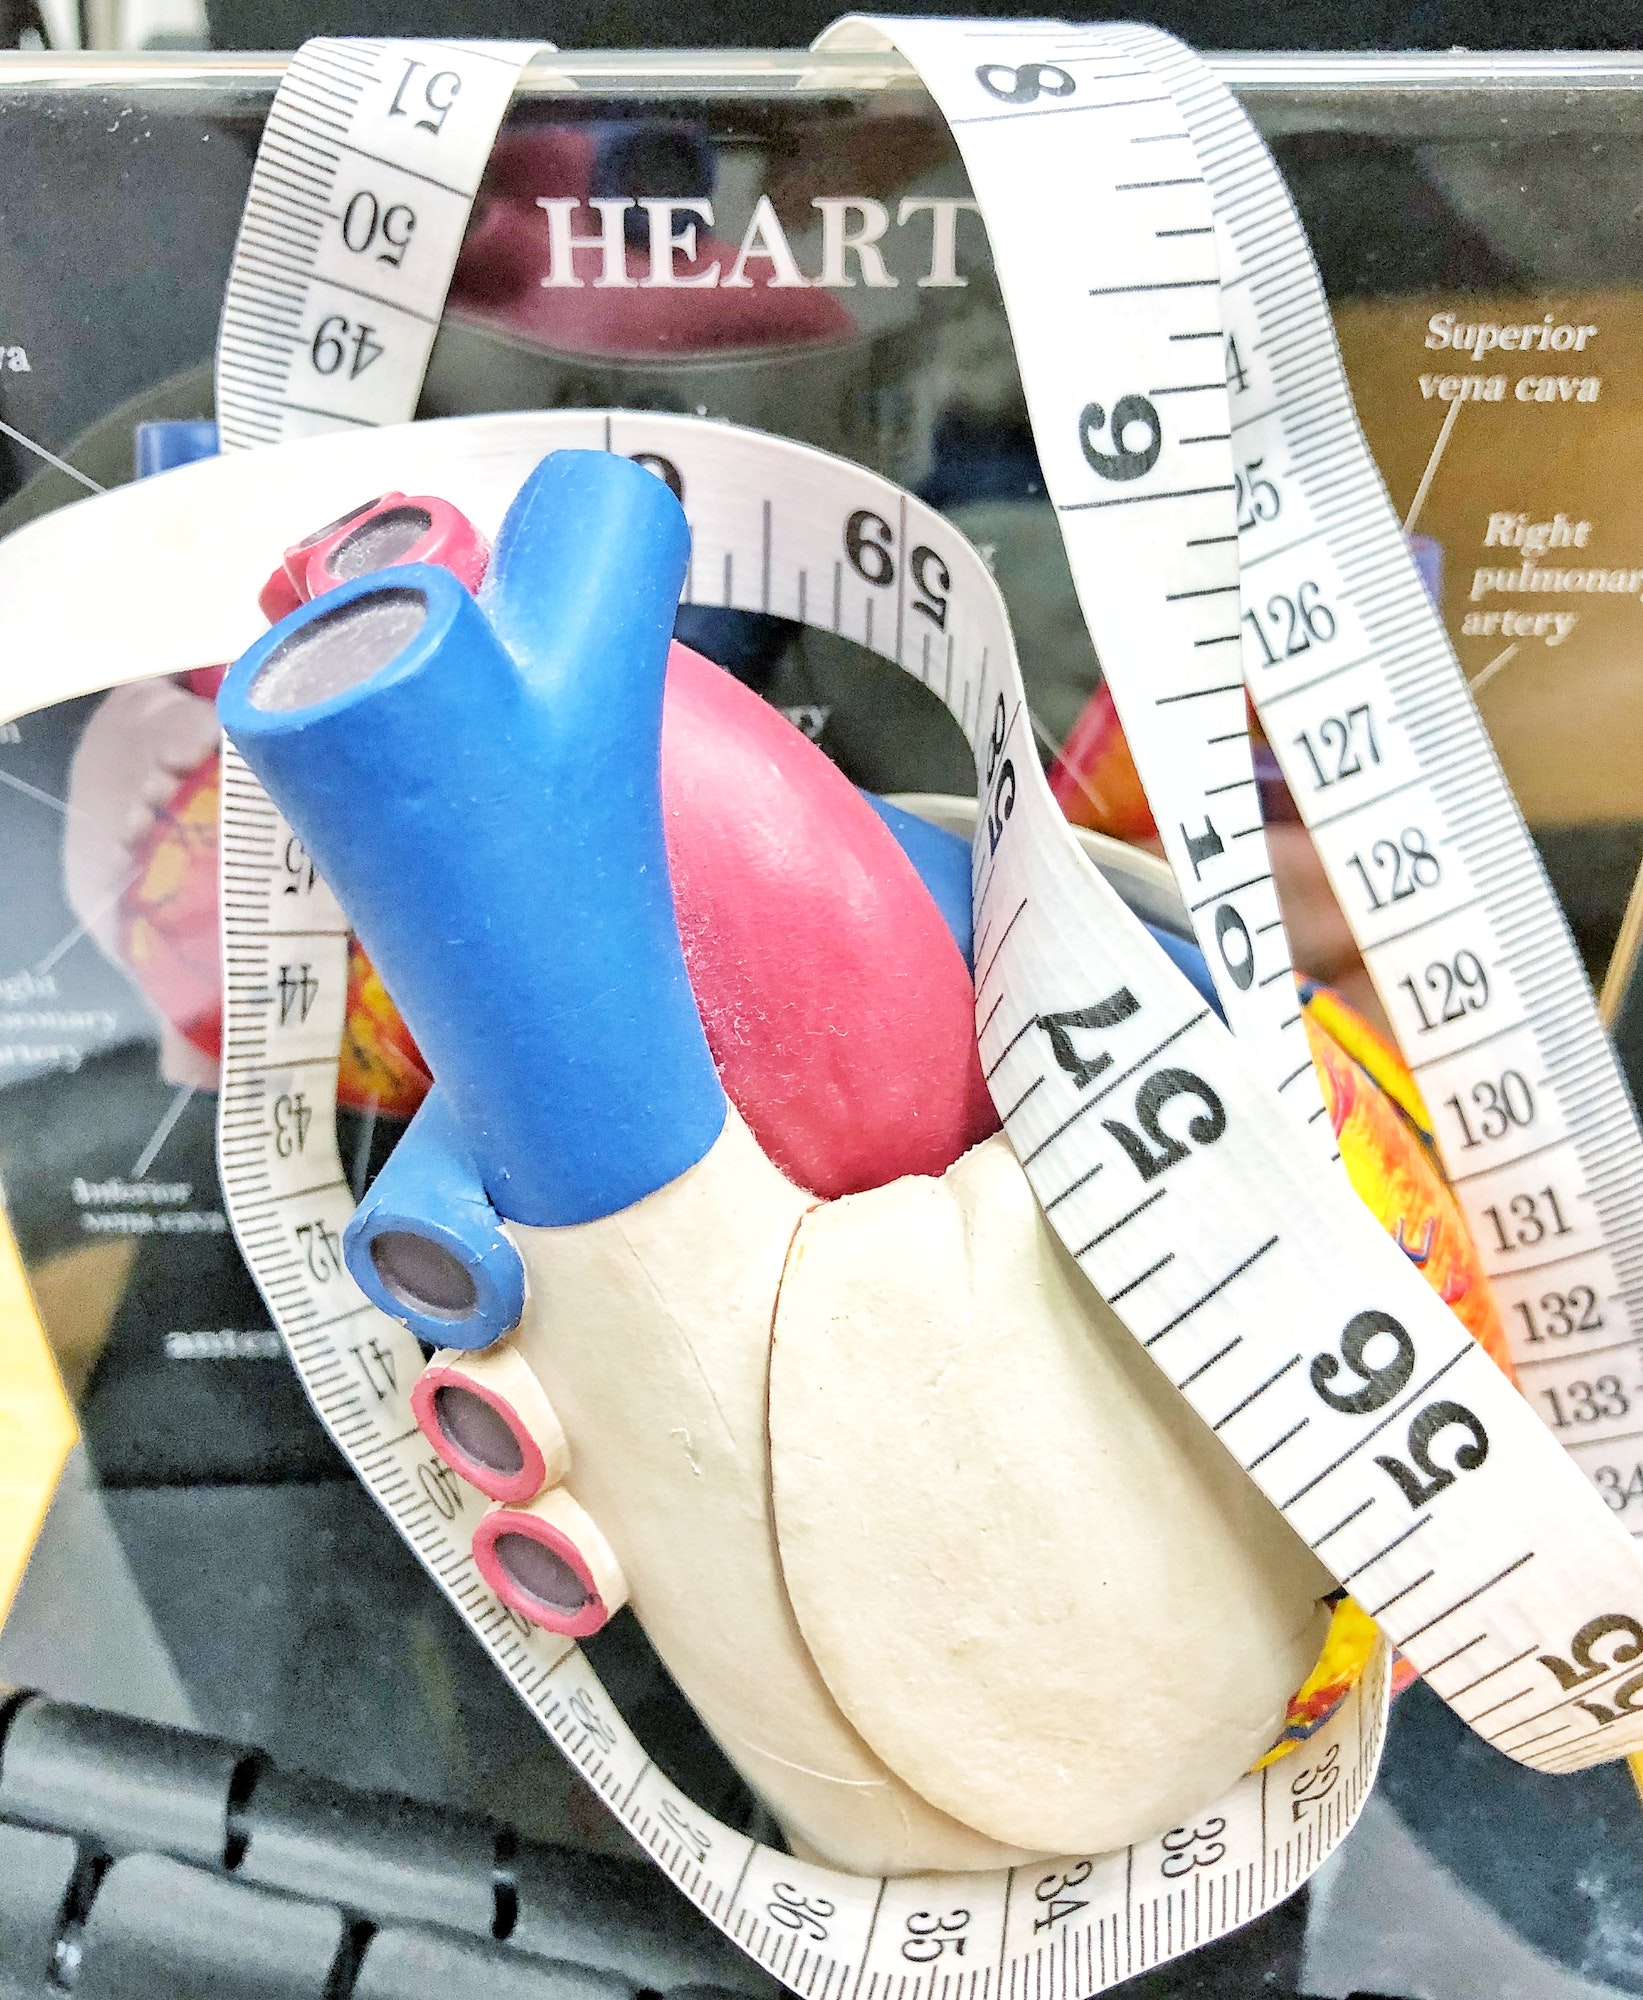 Heart Health Body Mass Index BMI Heart Health Men’s health Women’s health Healthy lifestyle Tape